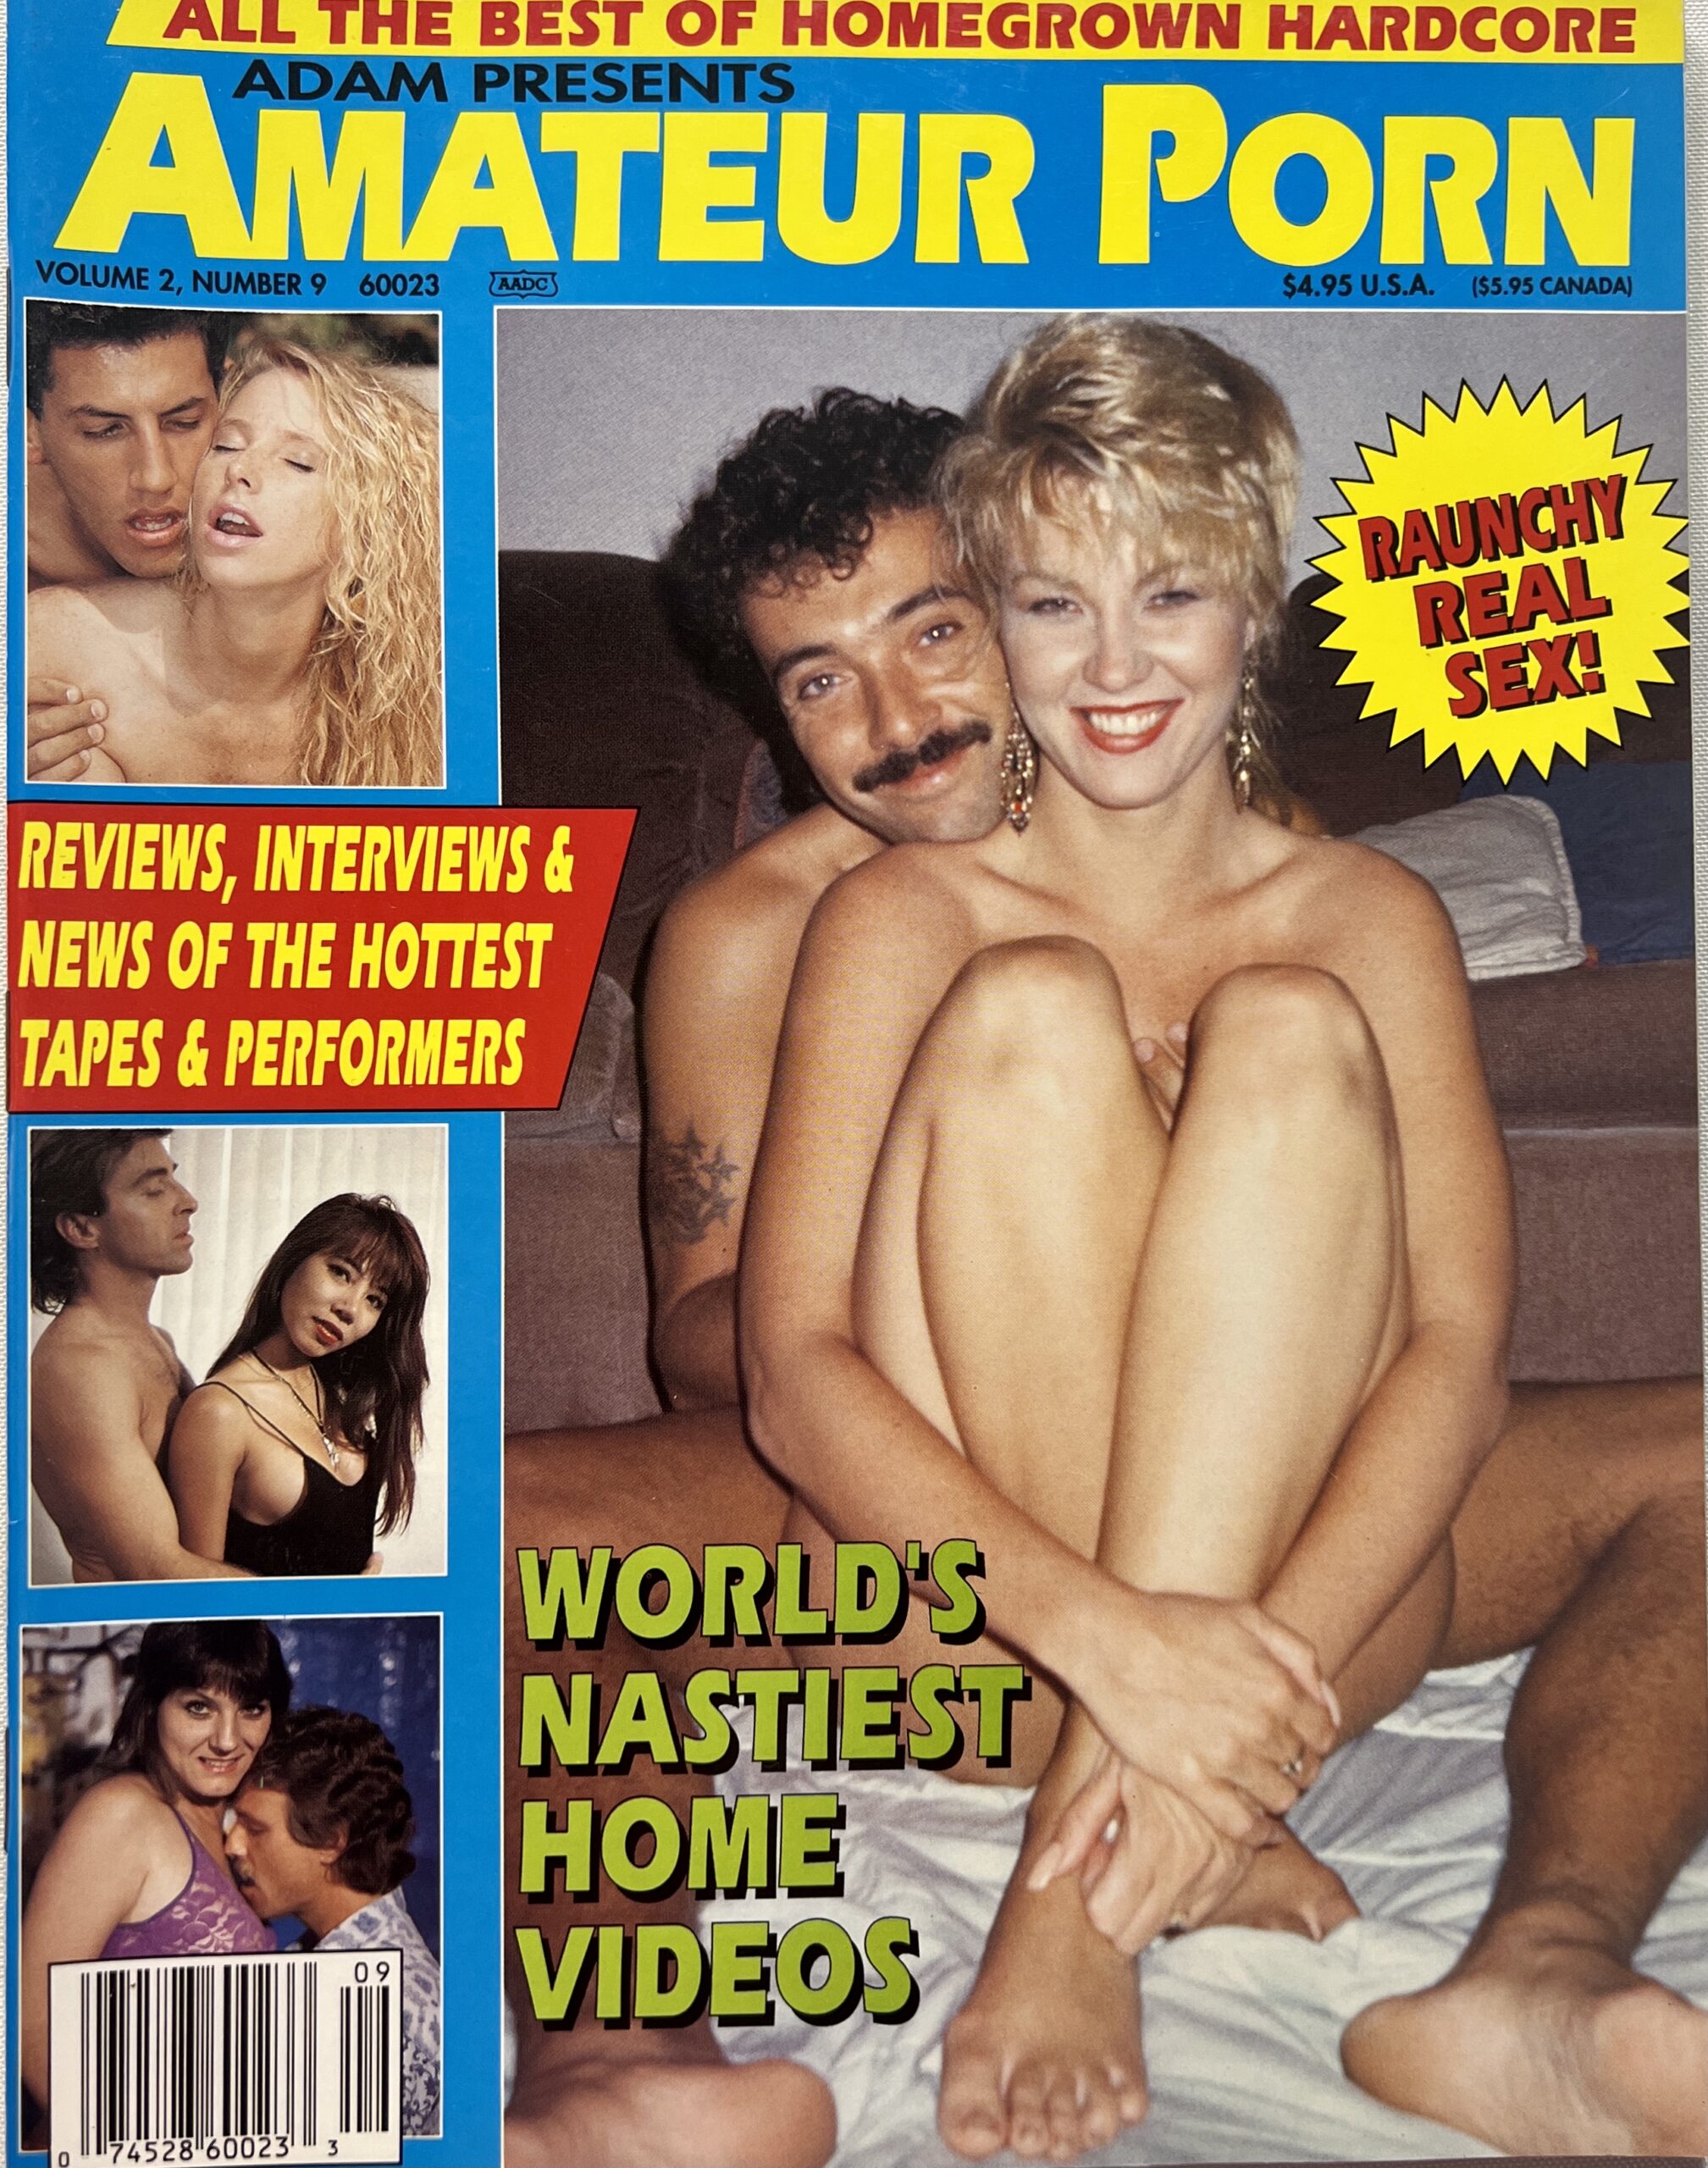 Adam Presents Amateur Porn June 1993 Adult Movie Magazine pic pic